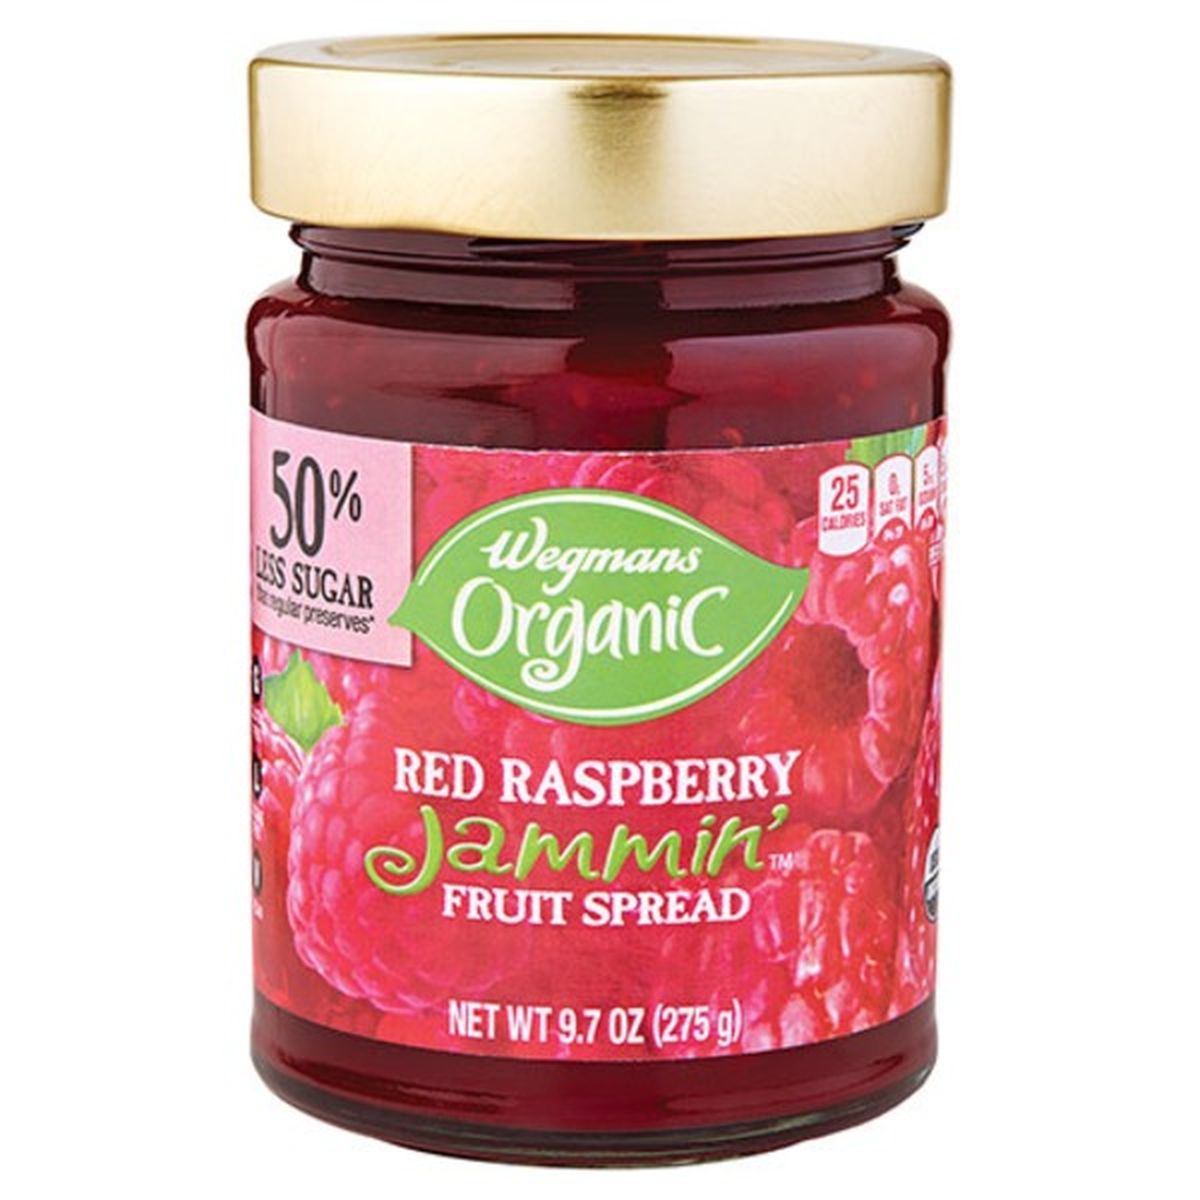 Calories in Wegmans Organic Jammin' Red Raspberry Fruit Spread